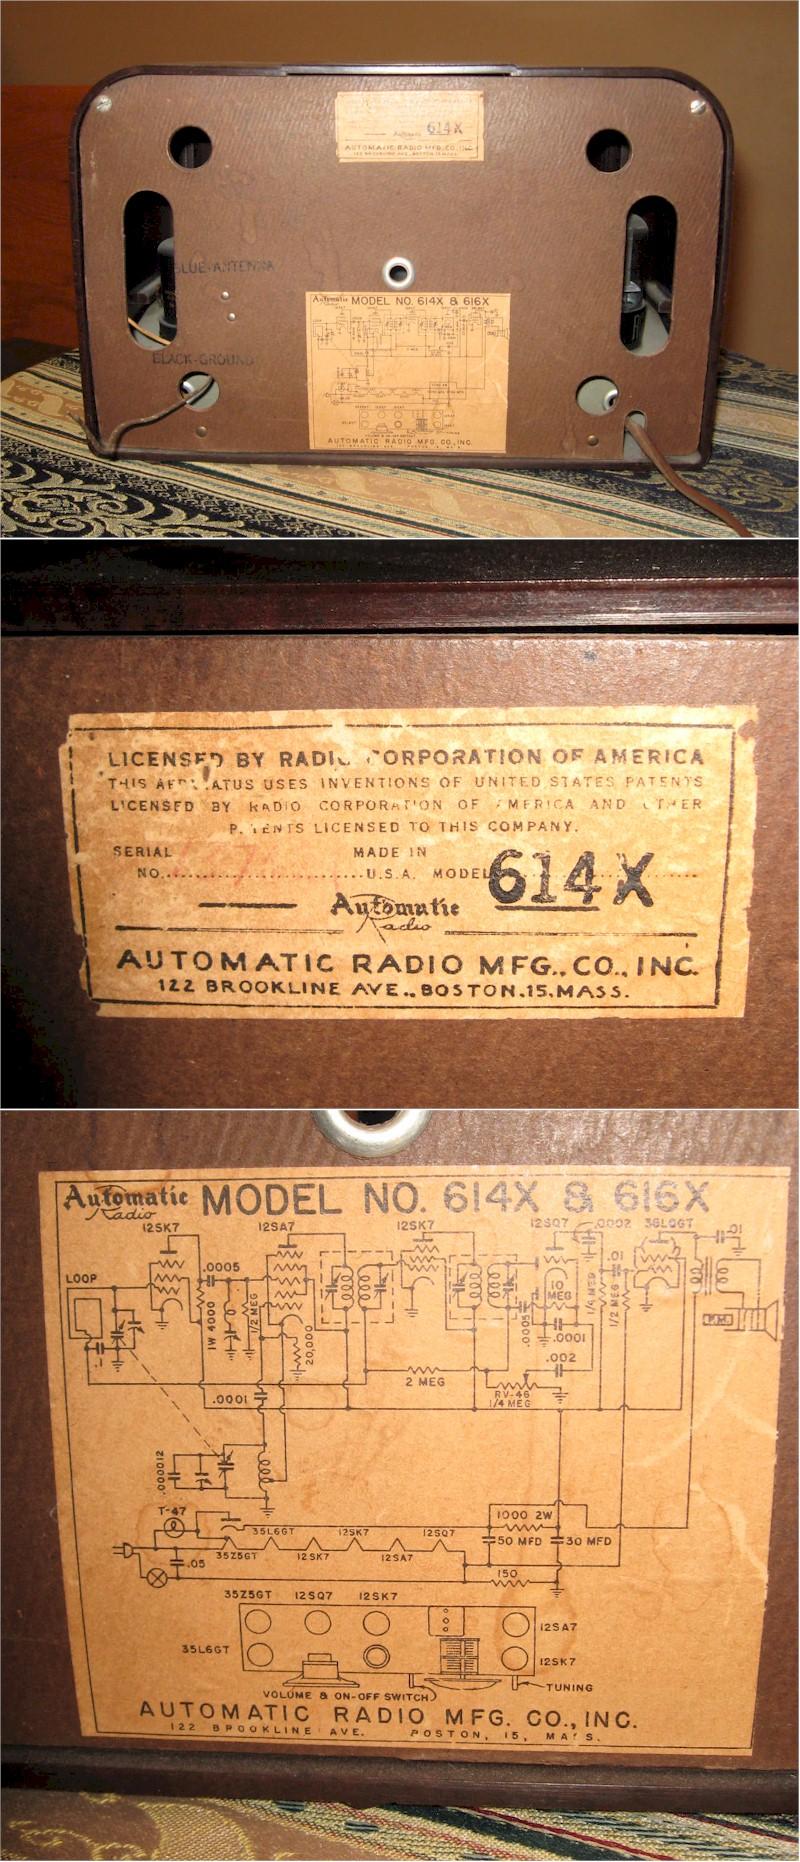 Automatic 614X